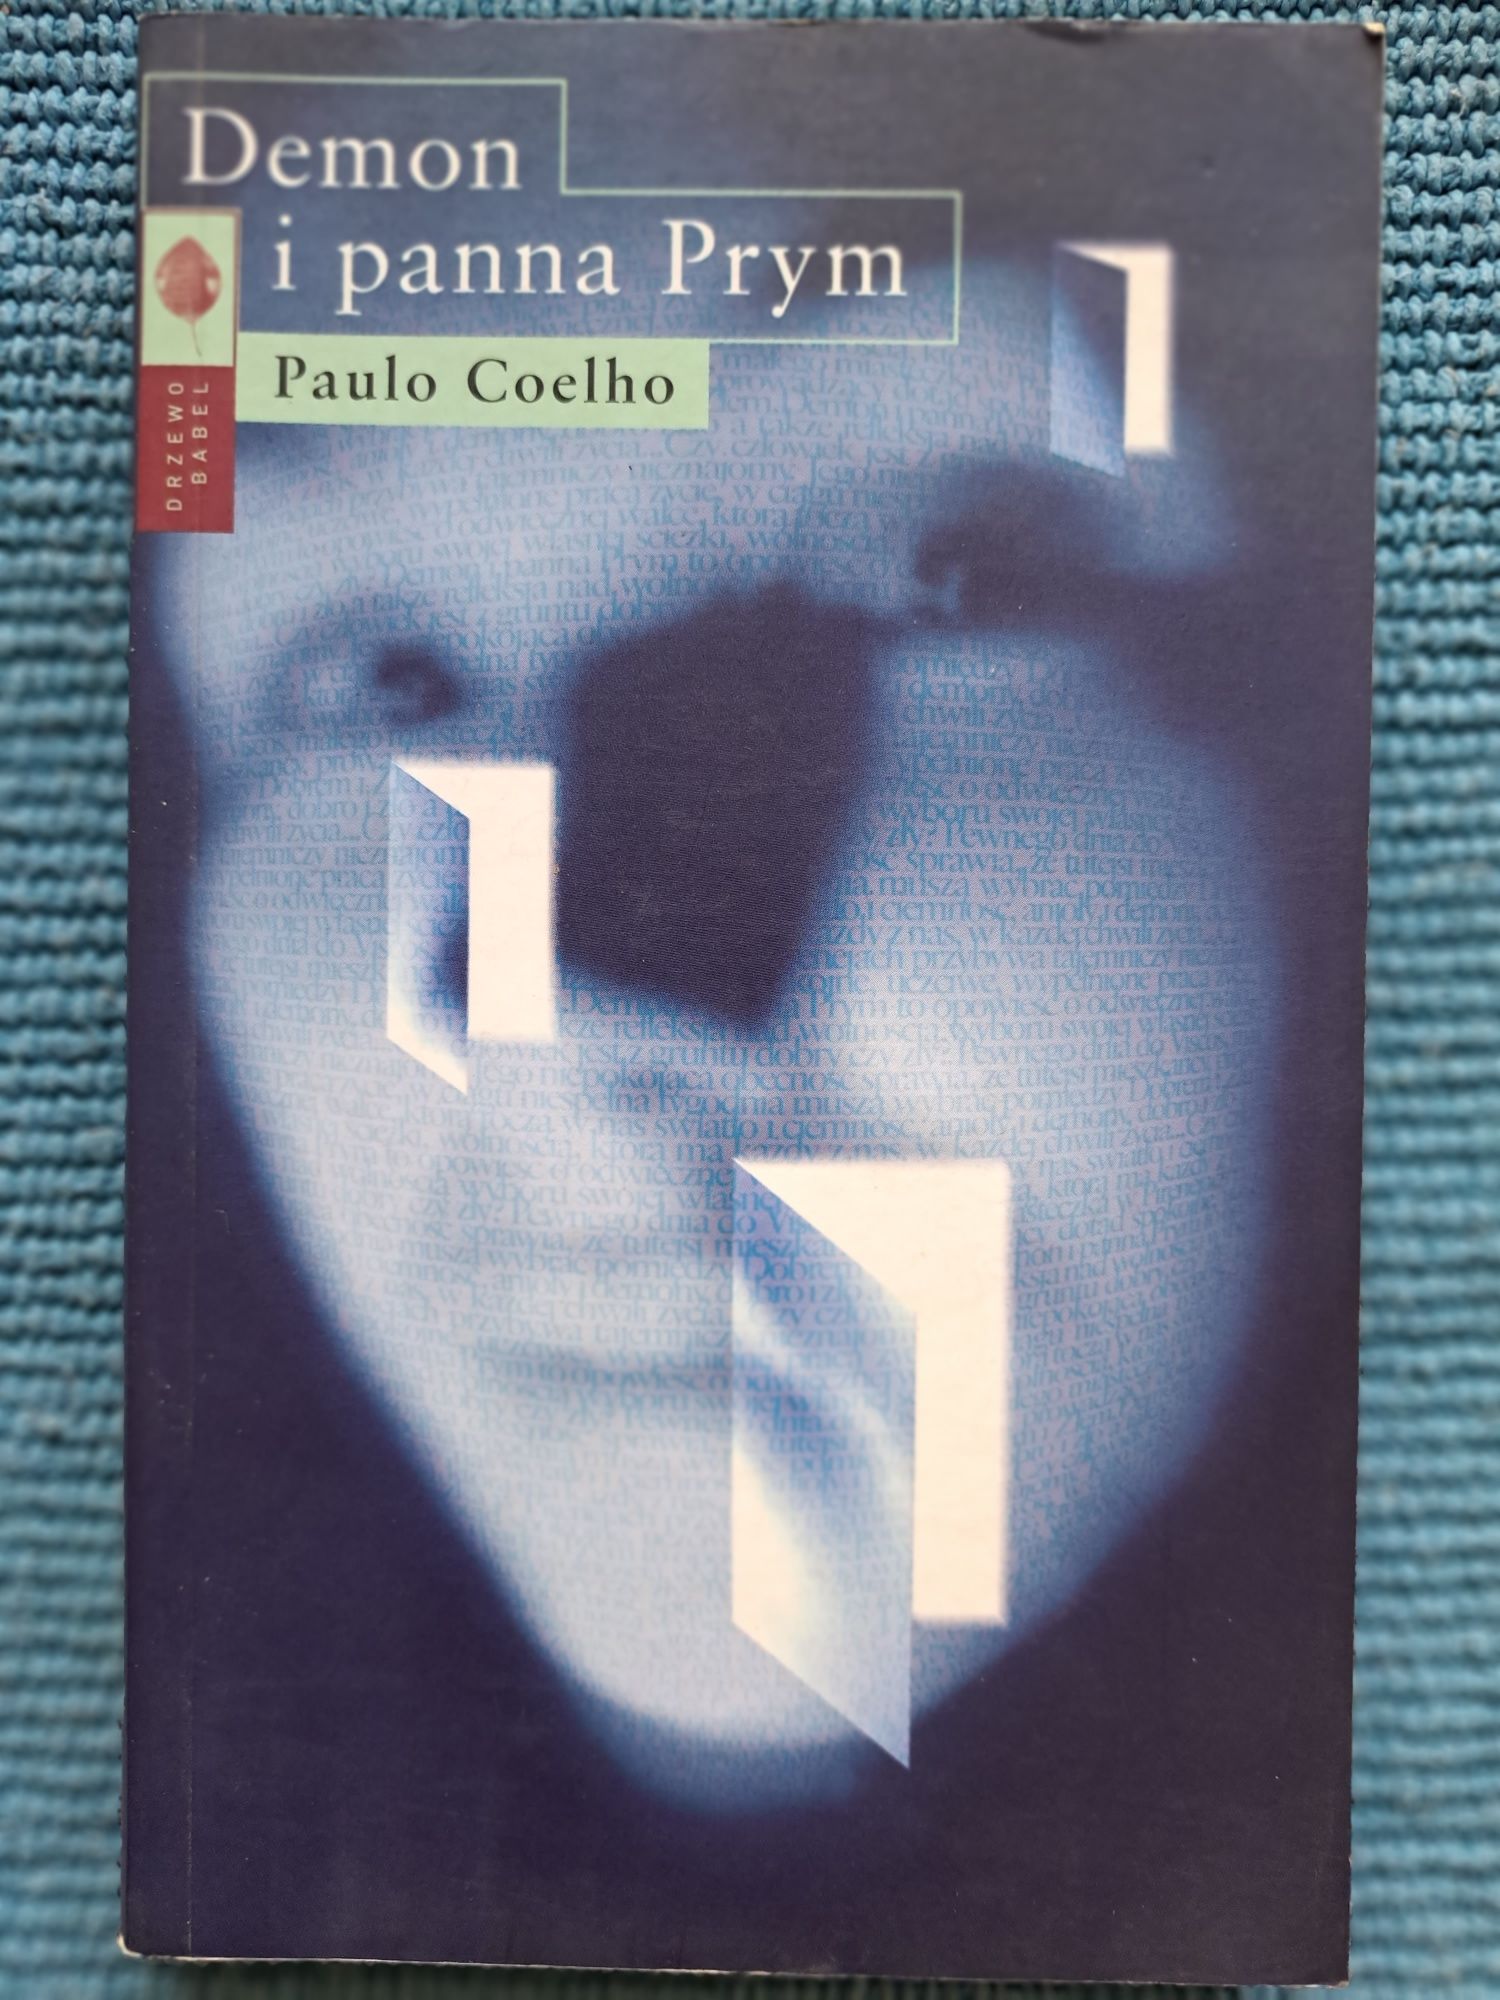 " Demon i panna Prym " Paulo Coelho